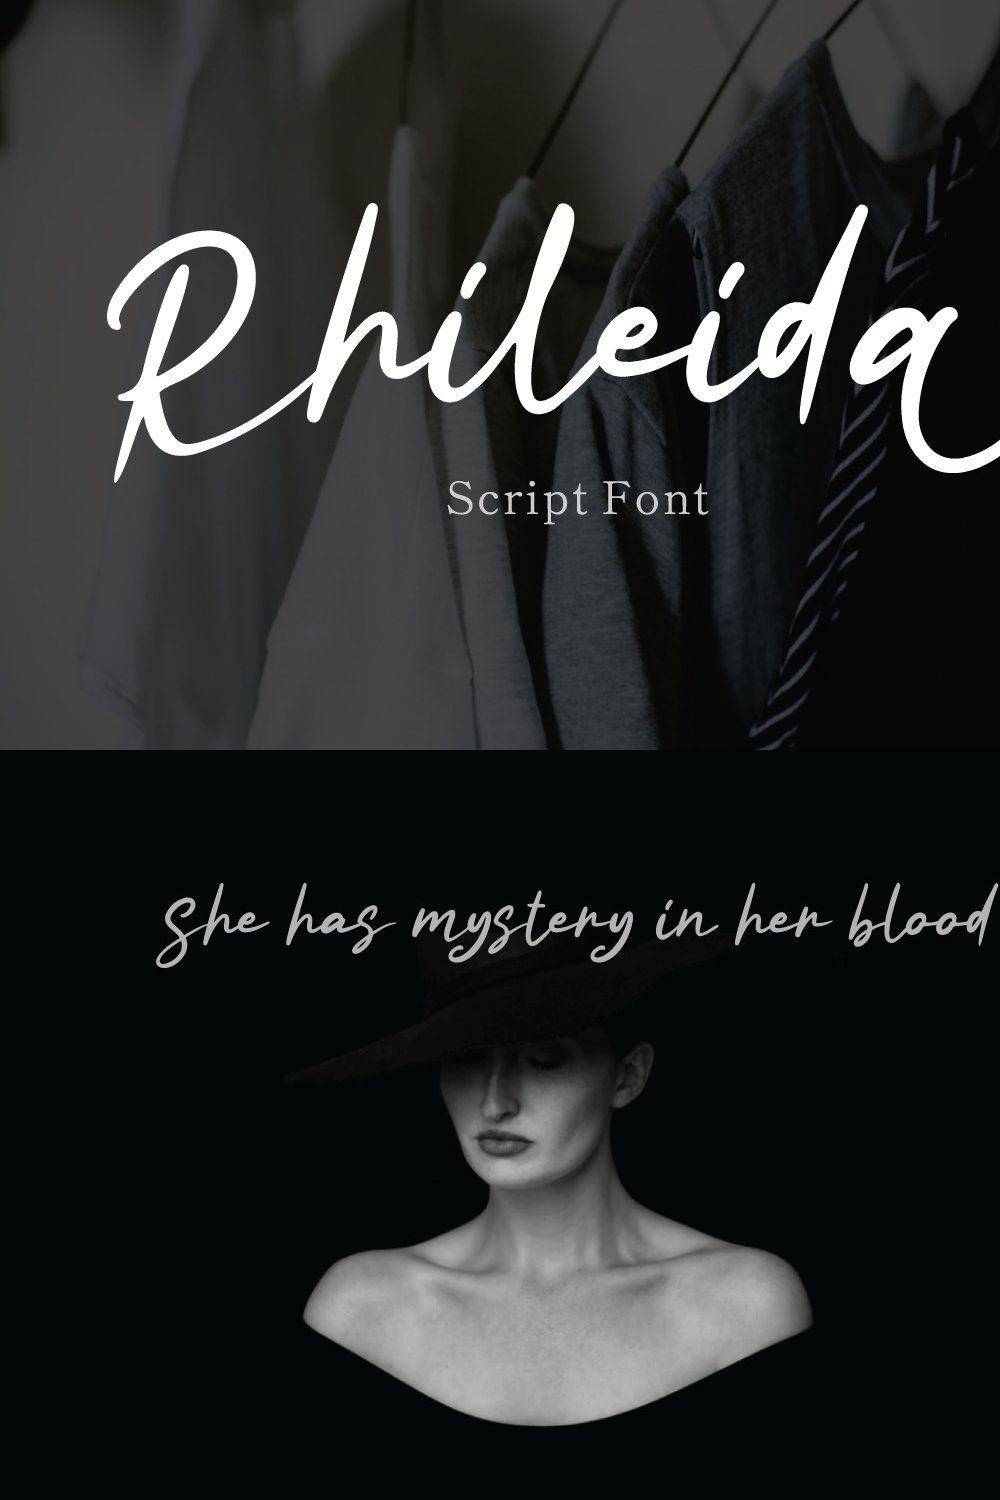 Rhiledia - Script Font pinterest preview image.